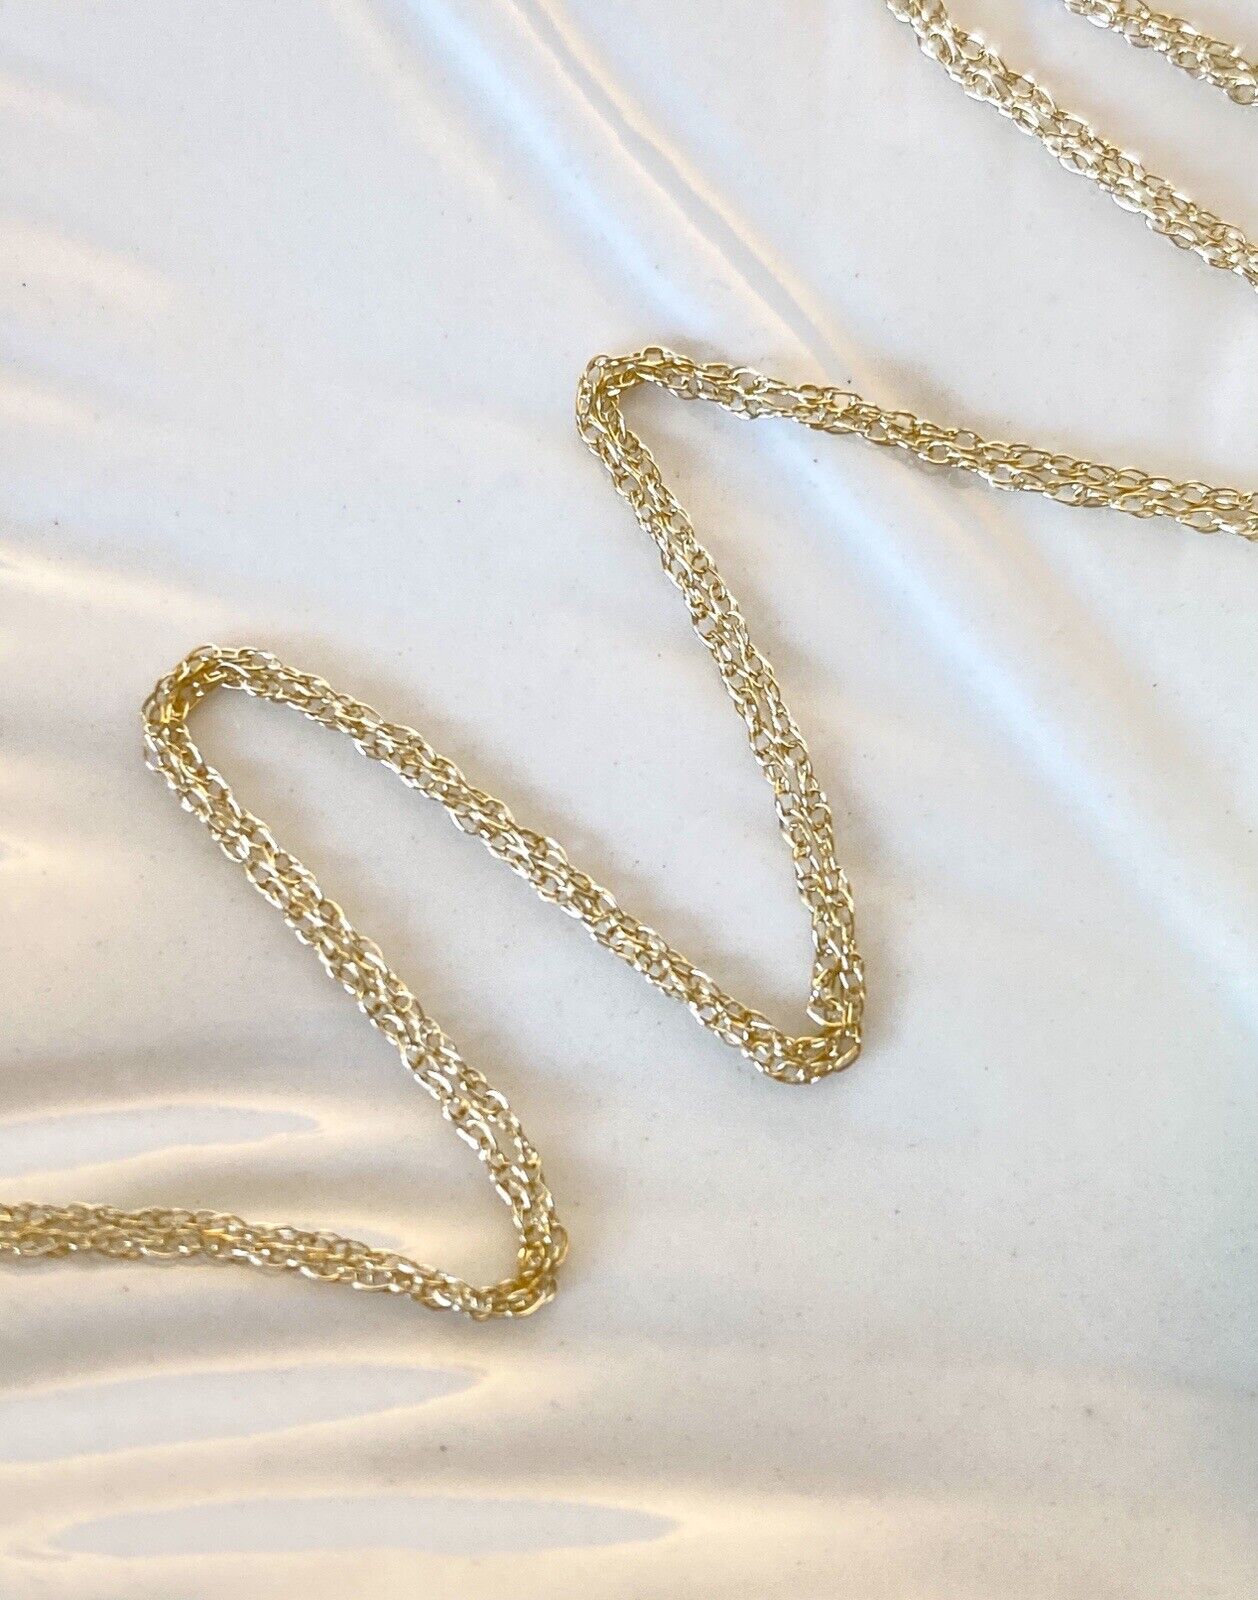 Genuine Prasiolite & White Topaz Solid 10k Yellow Gold Pendant/Necklace, New 18"